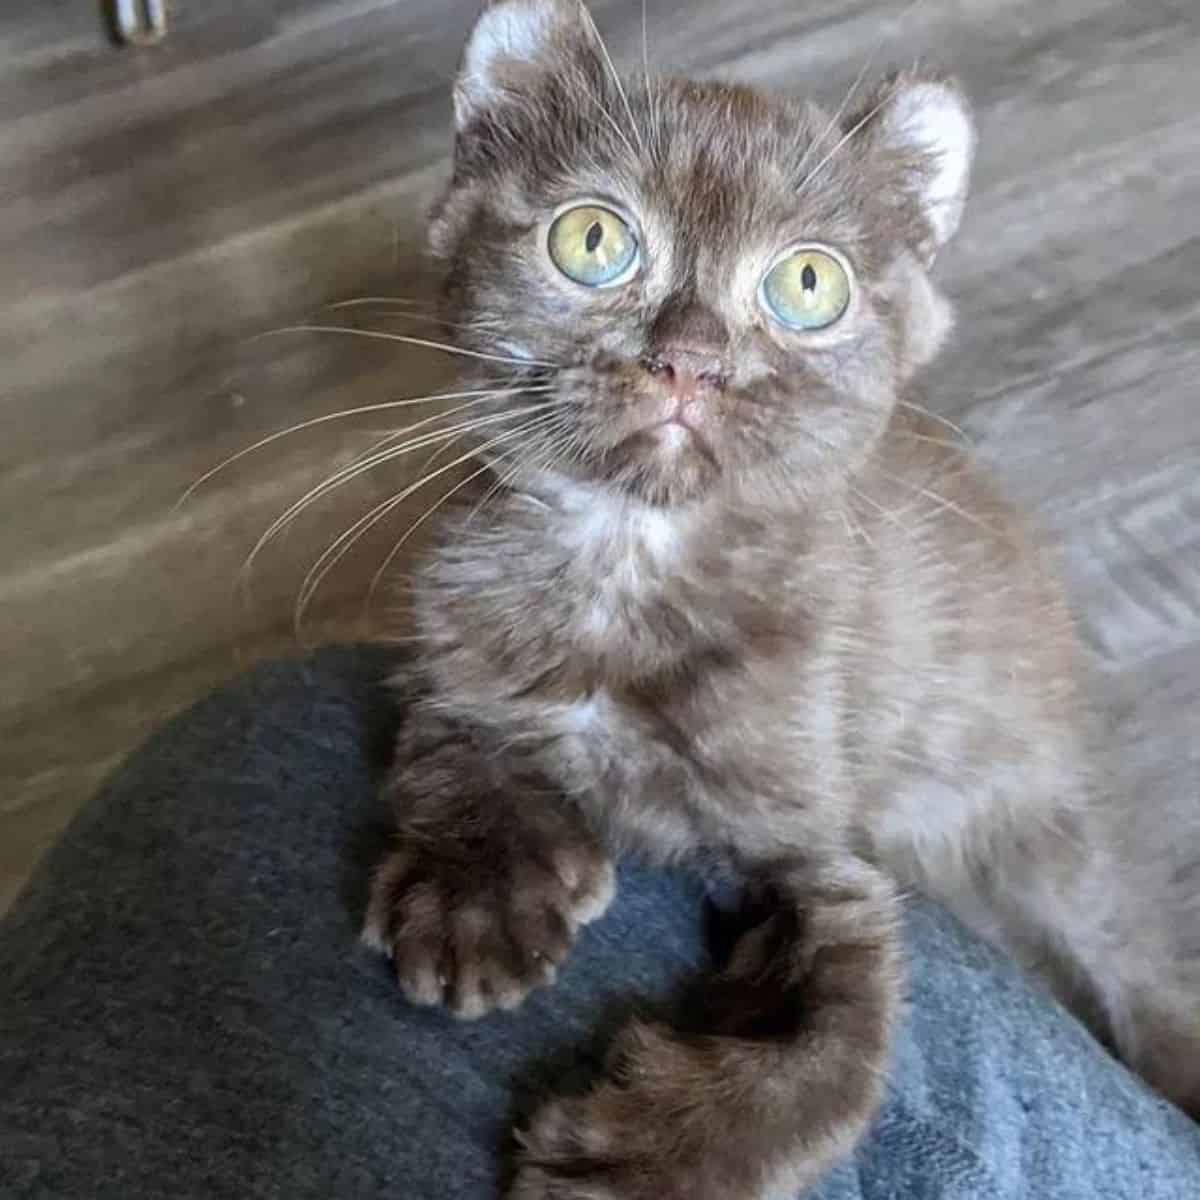 cute photo of the kitten with teddy bear ears